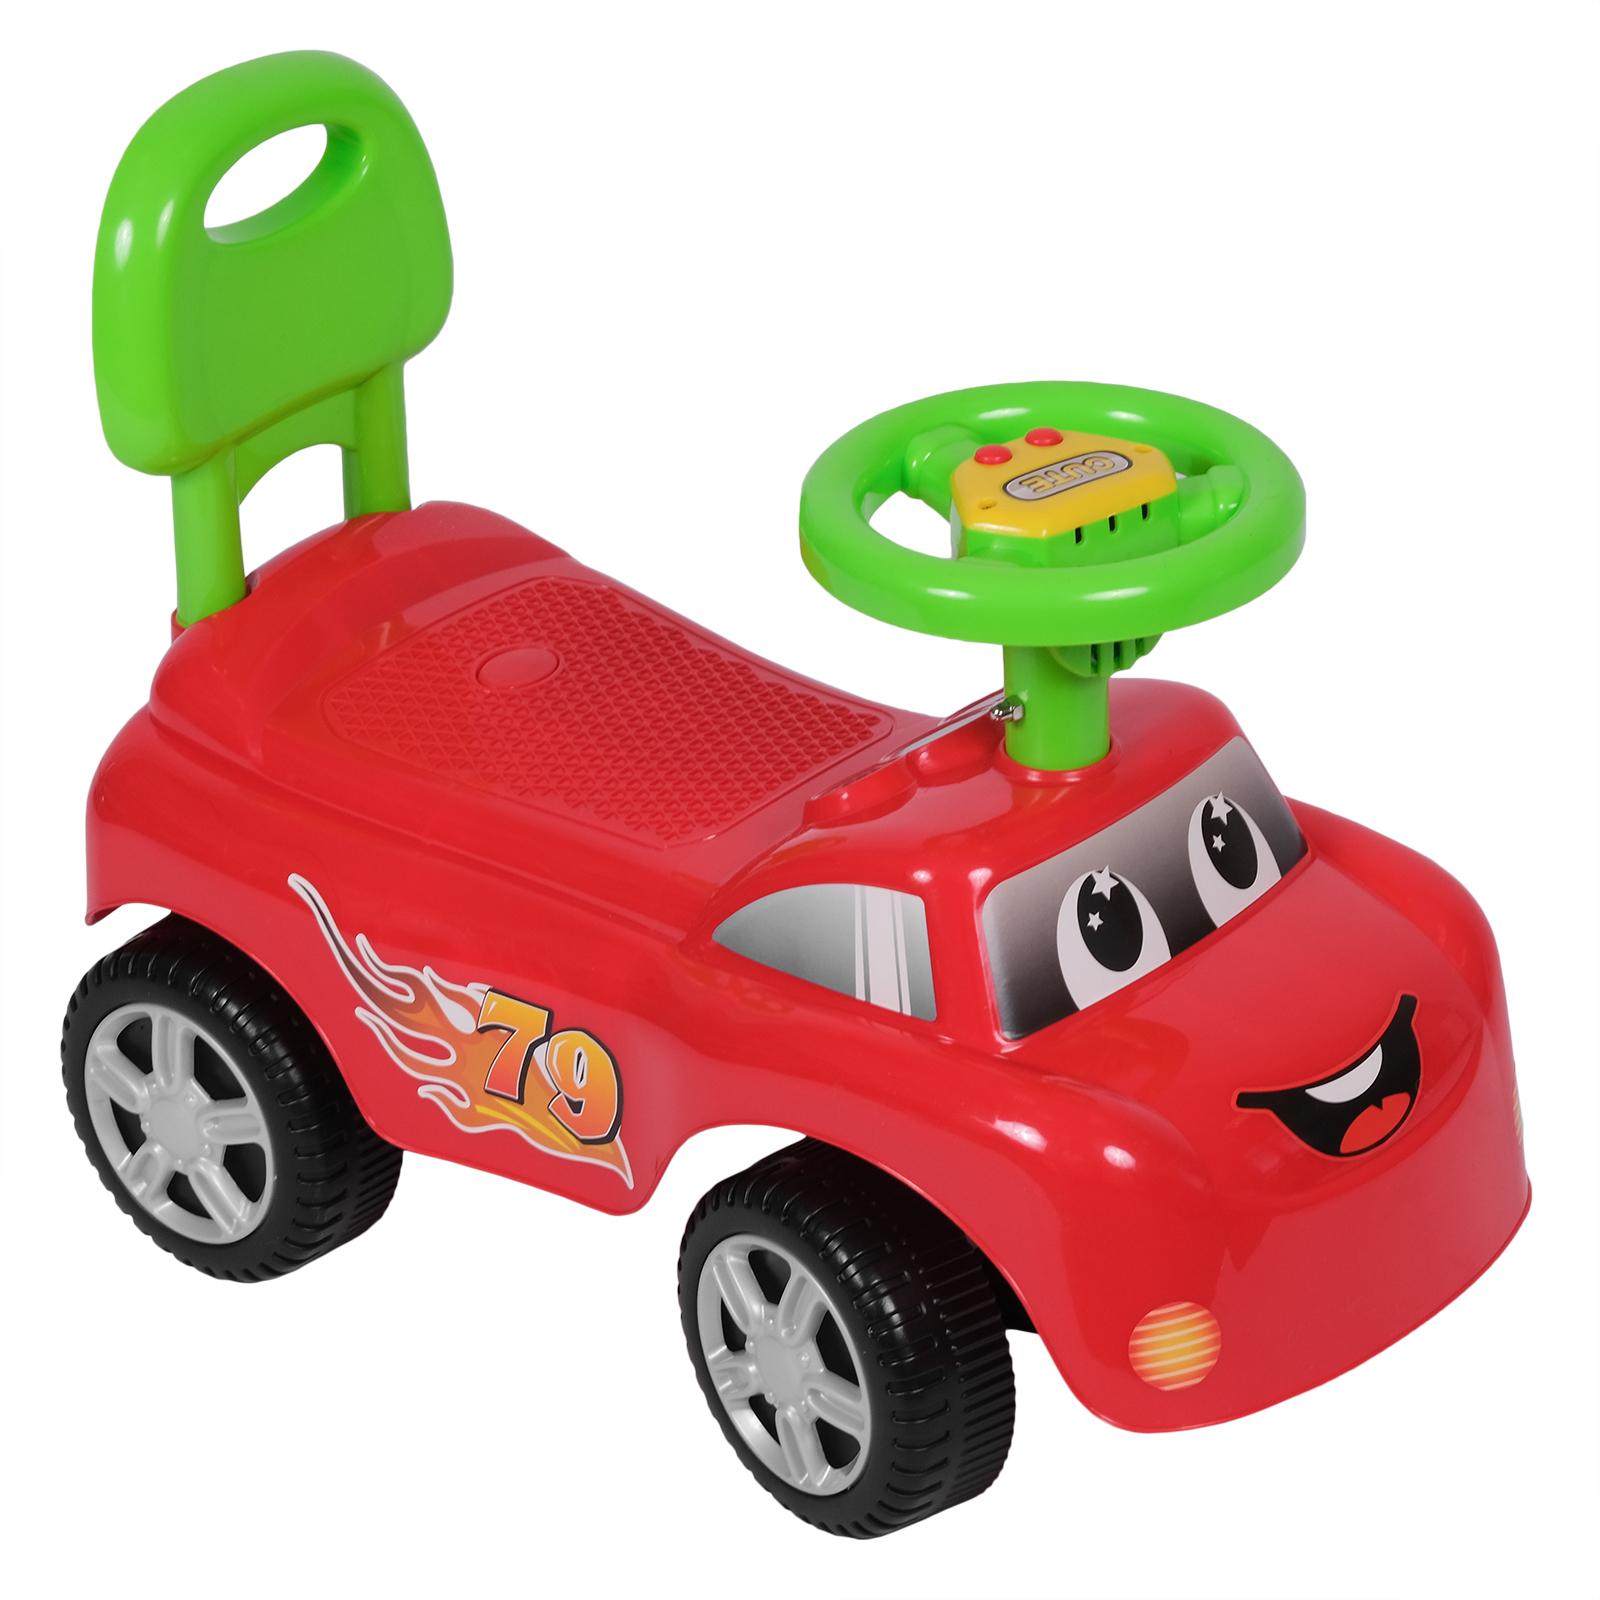 Каталка детская Sweet Baby Viaggiare V2 Red сортер каталка smart baby озорной мусоровозик свет звук jb0334033